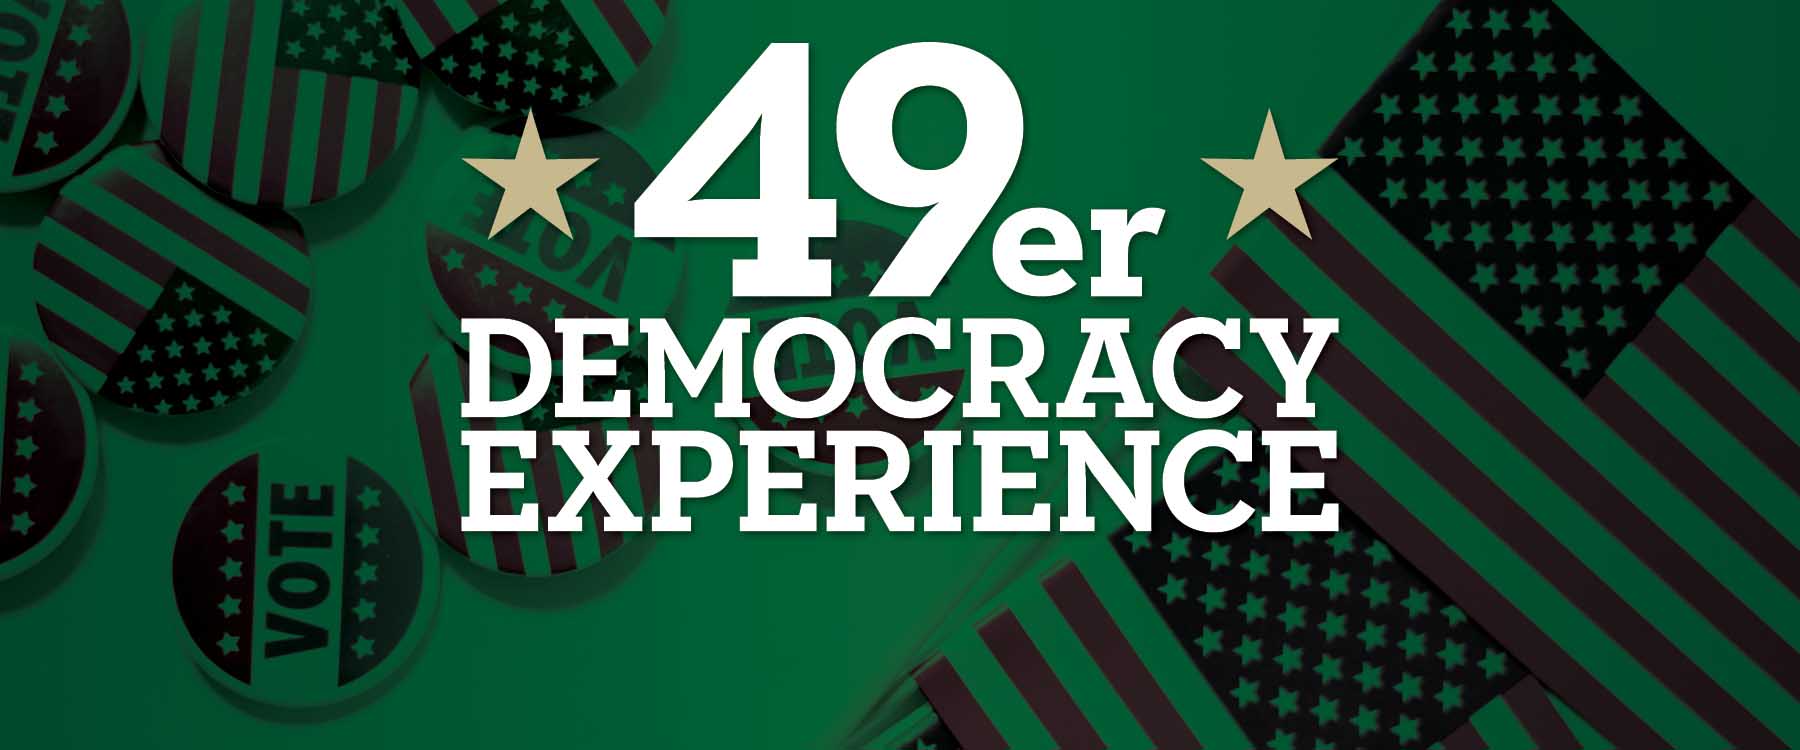 49er Democracy Experience graphic